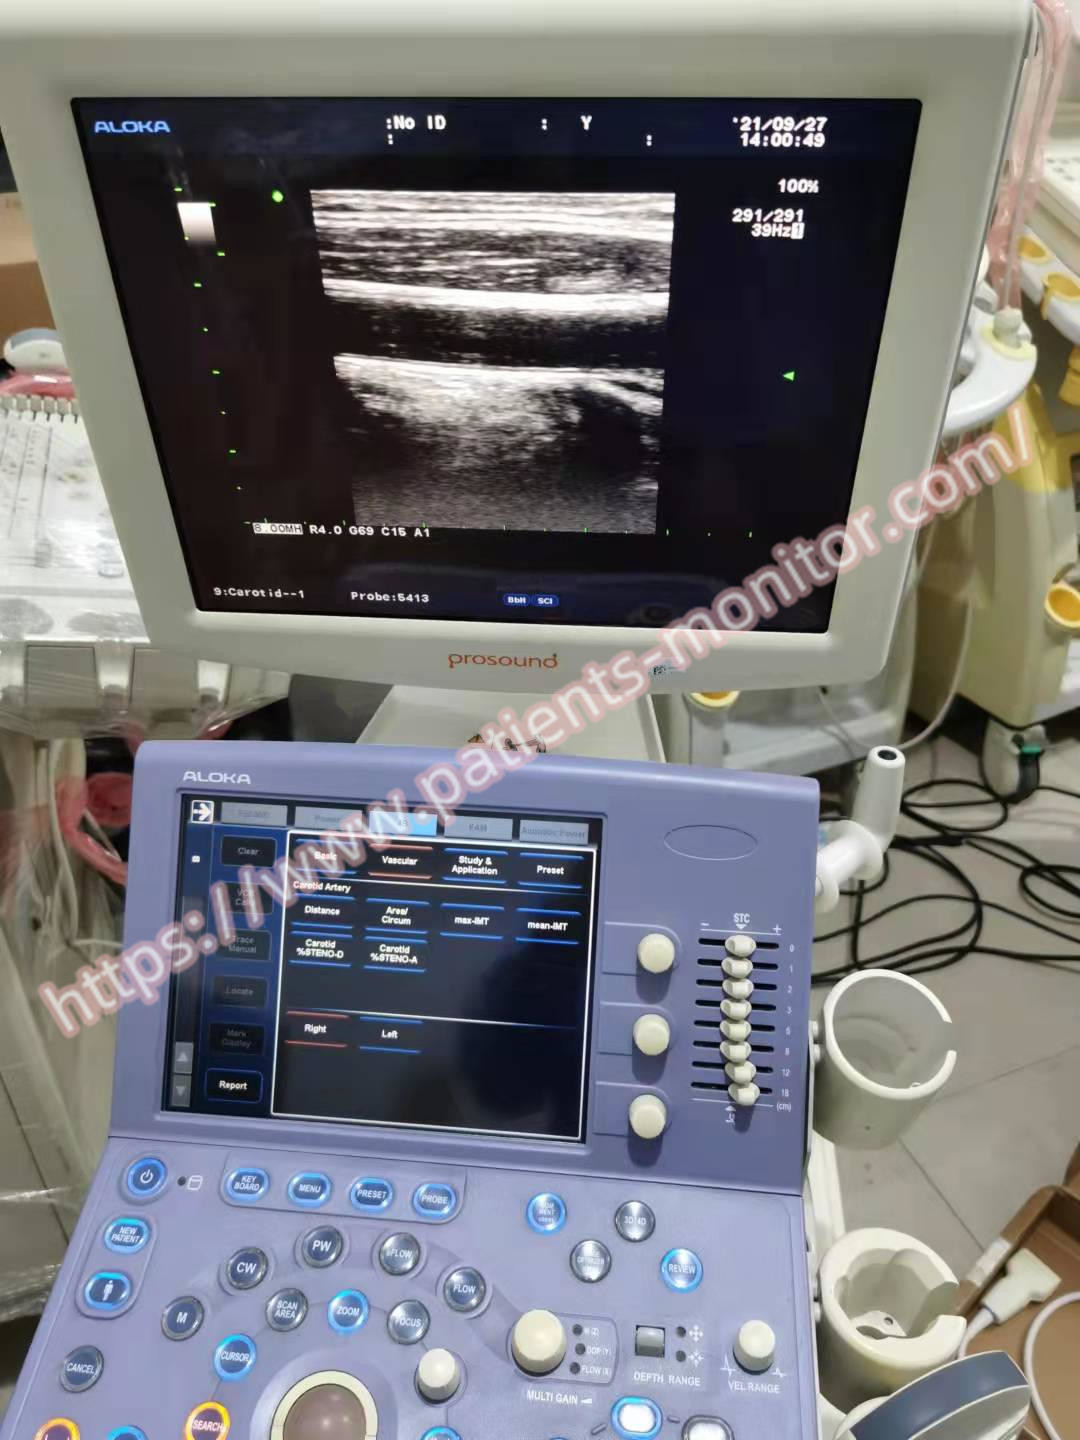  Aloka Prosound 6 Ultrasound Linear Probe Model Ust-5413 For Hospital Manufactures